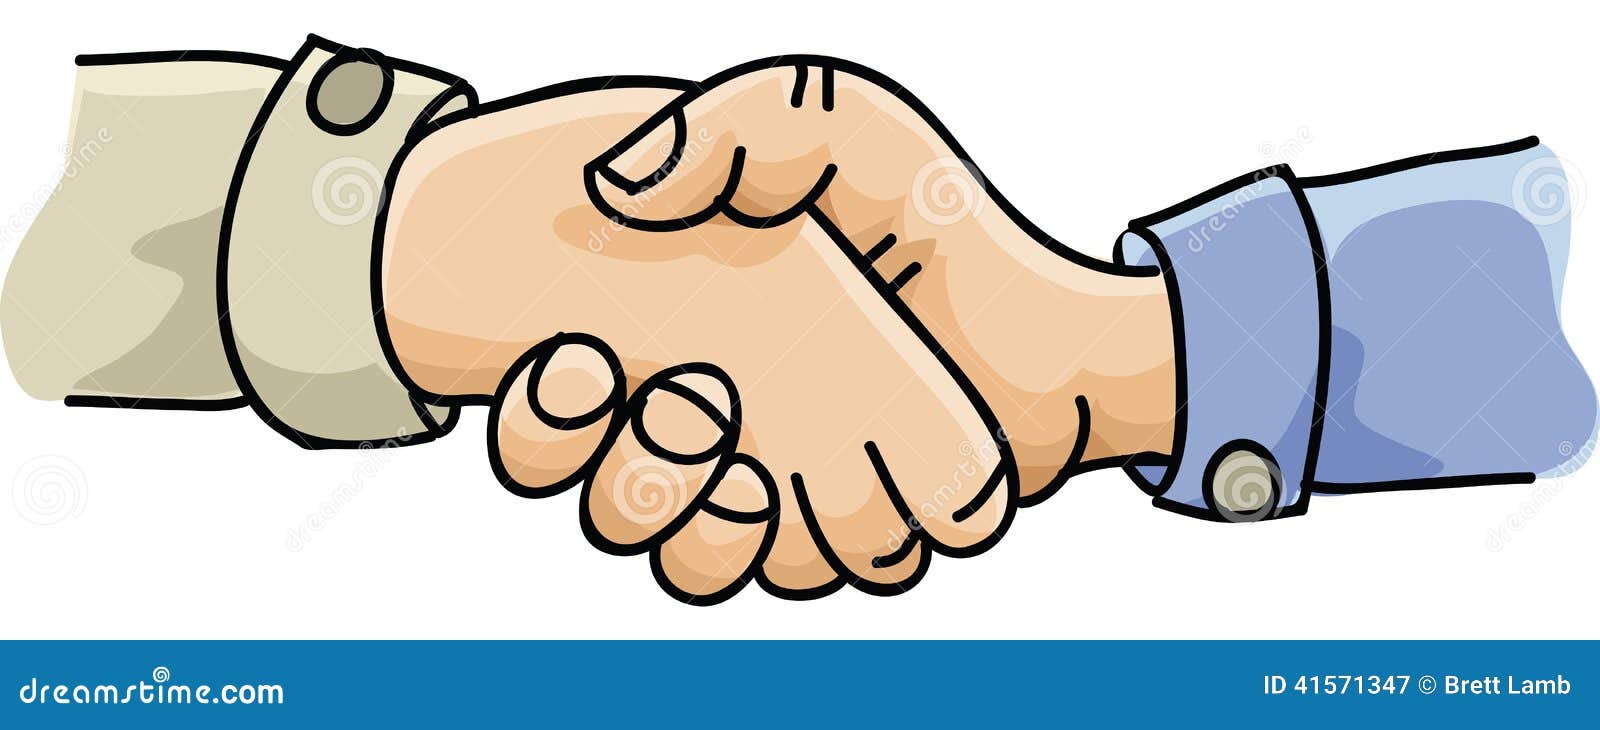 Hands Shaking stock illustration. Illustration of handshake - 41571347